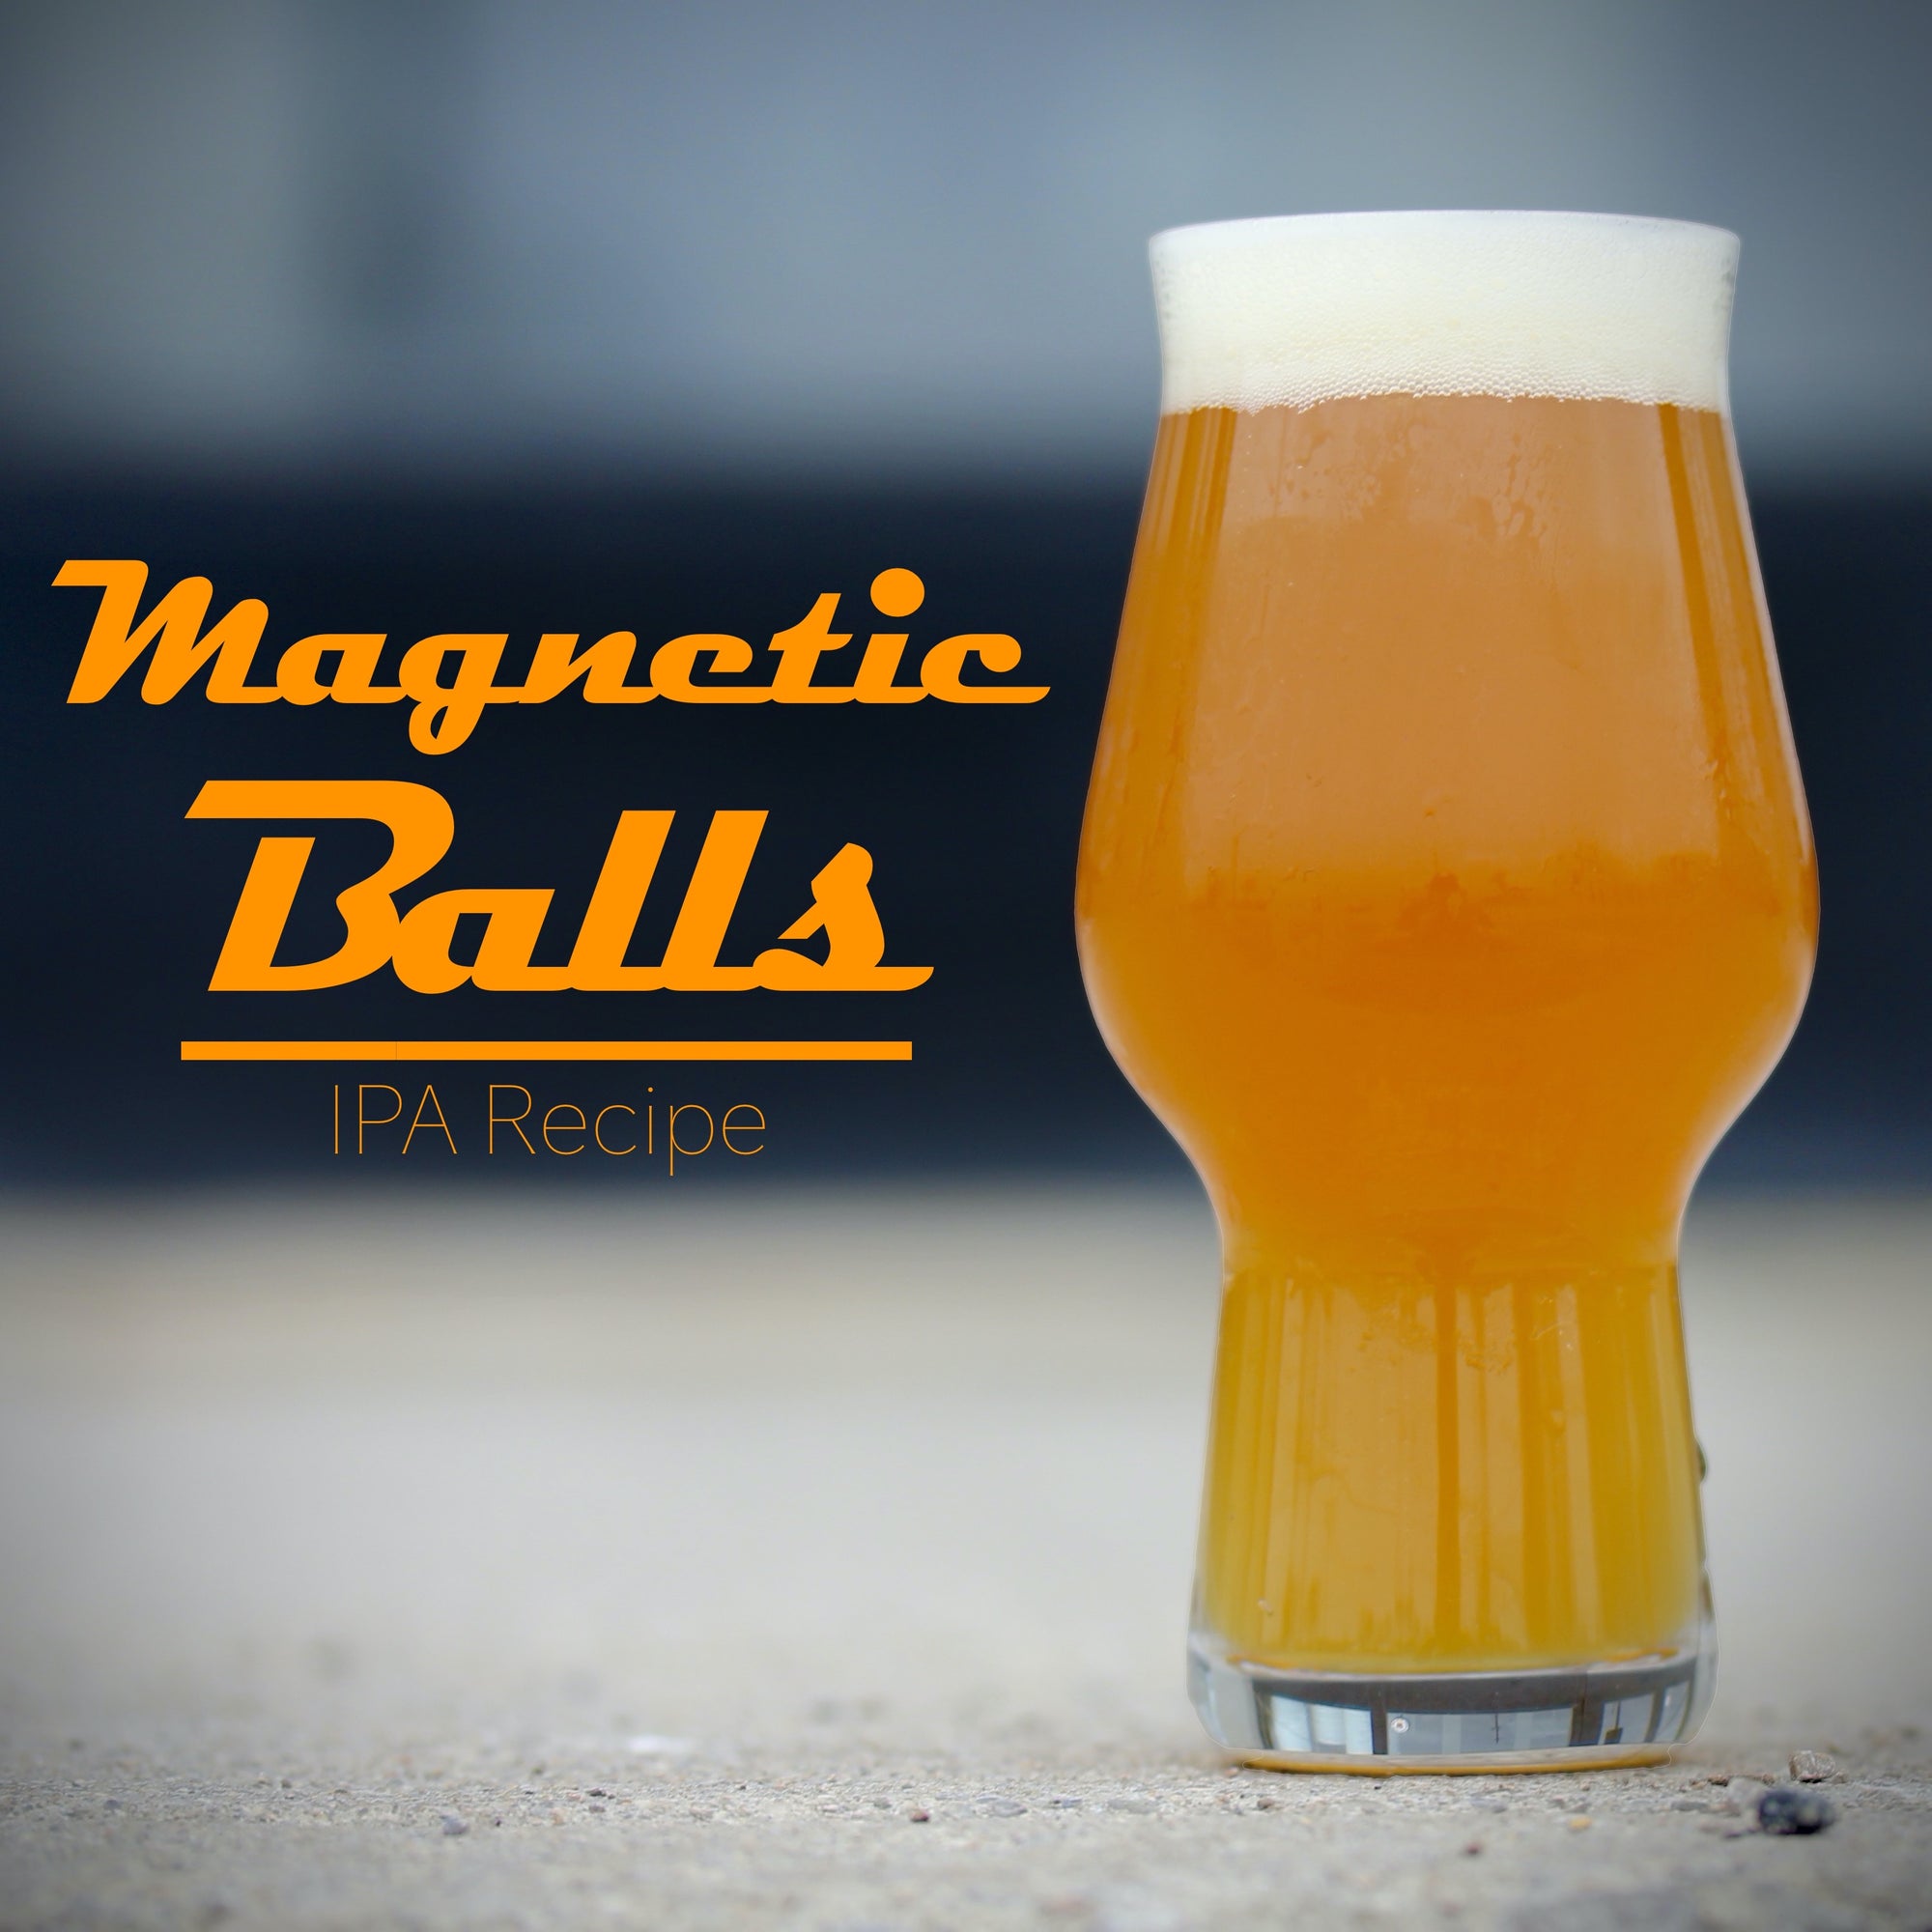 Magnetic Balls - IPA Recipe